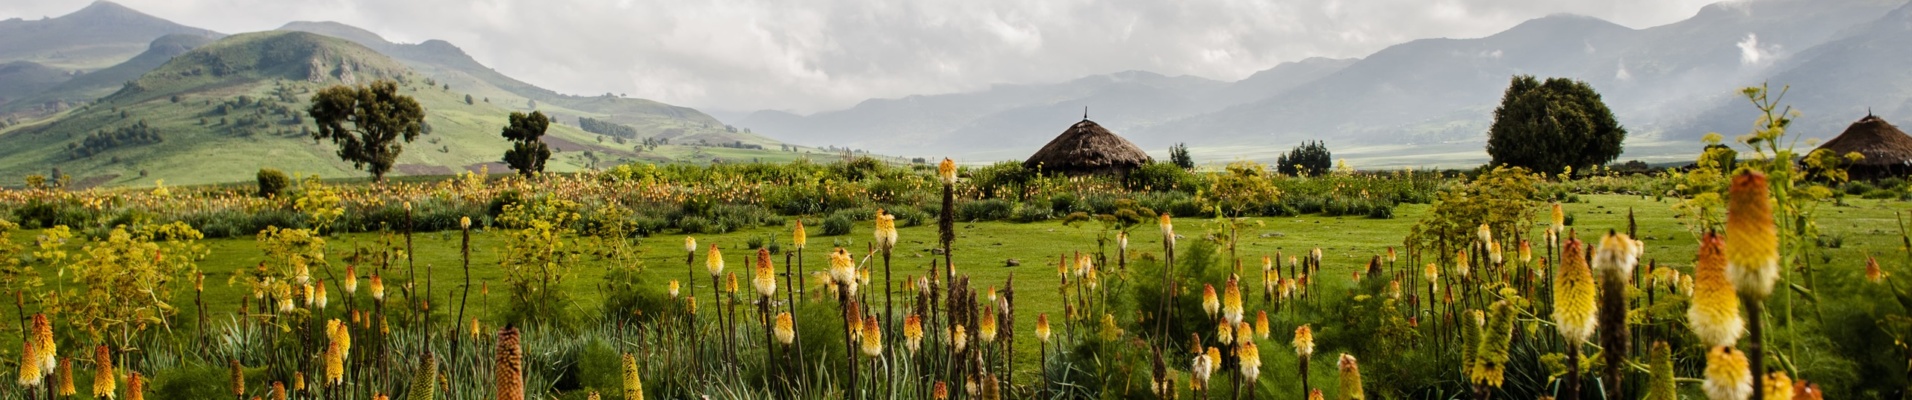 ethiopie paysage